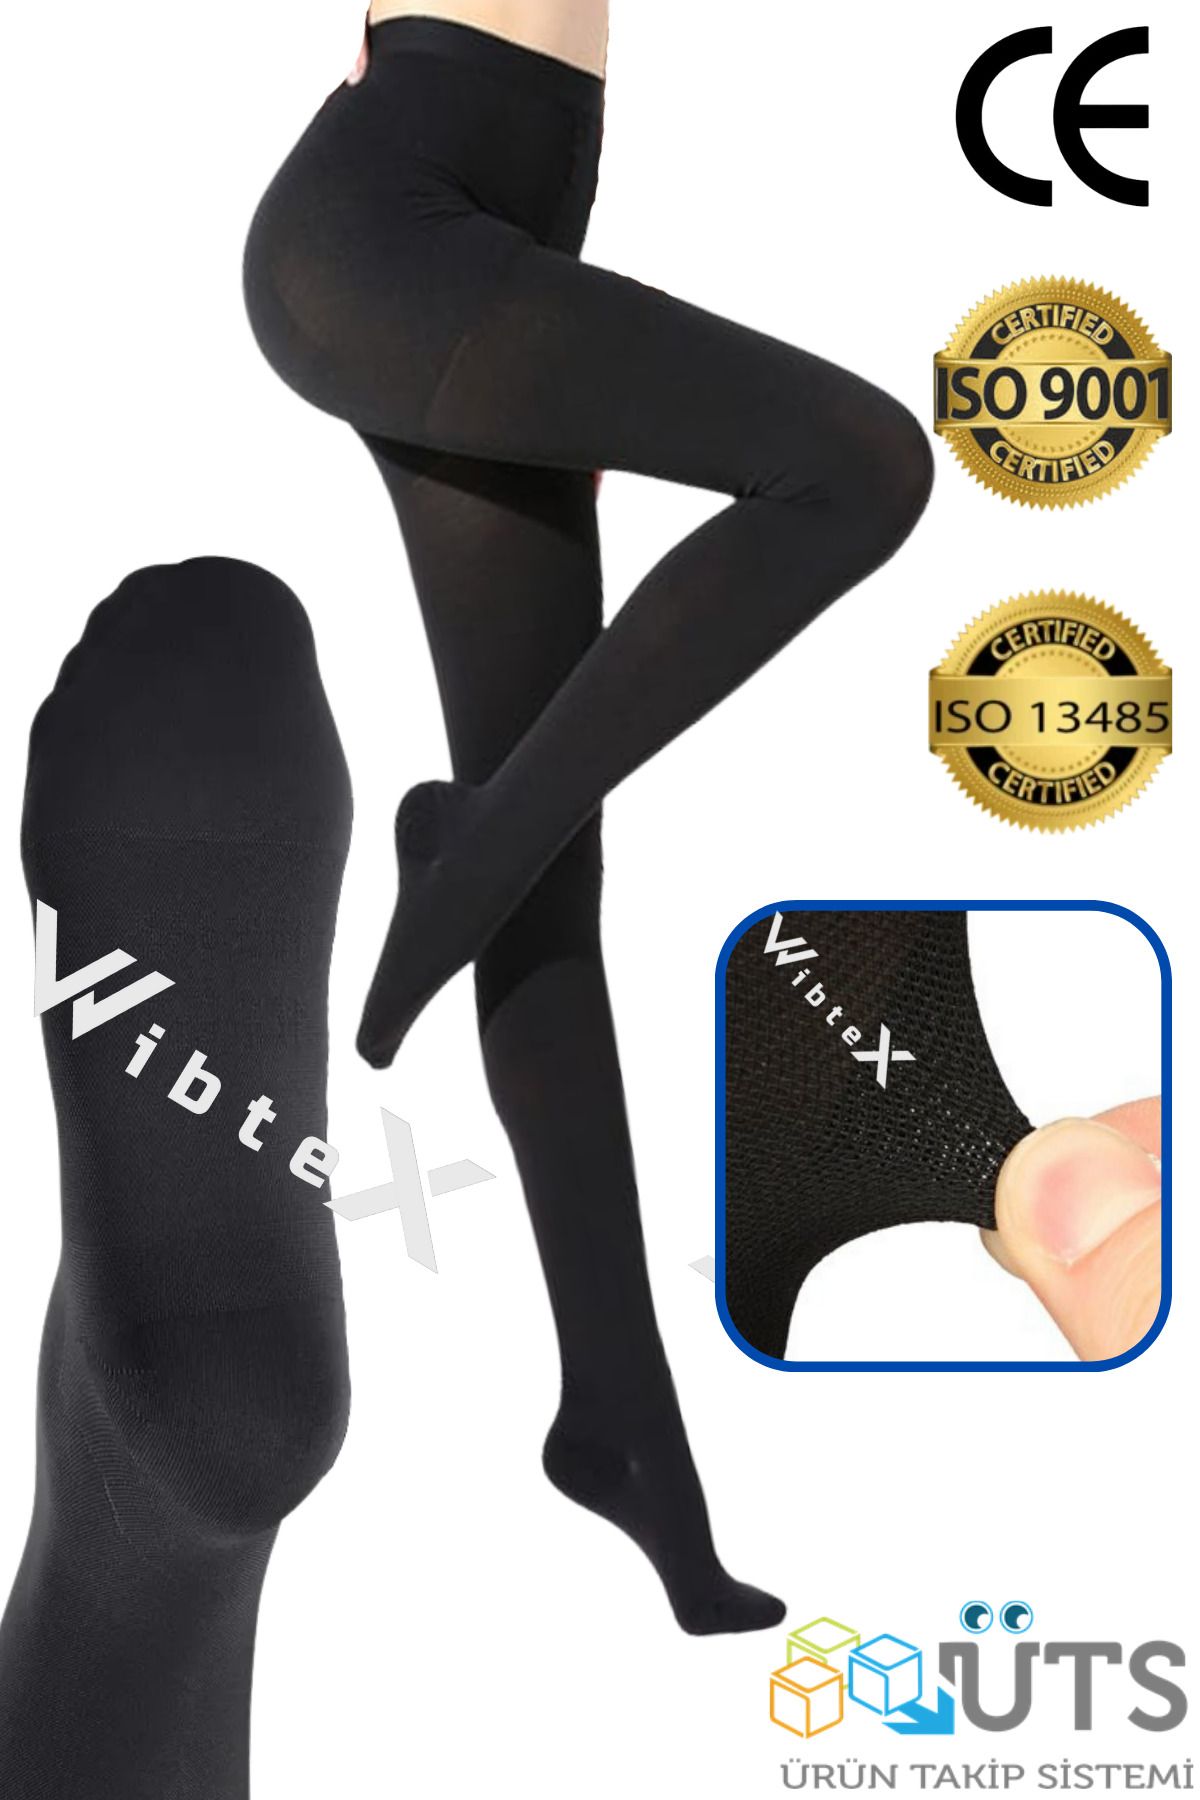 wibtex Külotlu Variss Çorabı Orta Basınç Burnu Kapalı (SİYAH RENK) (ÇİFT BACAK)